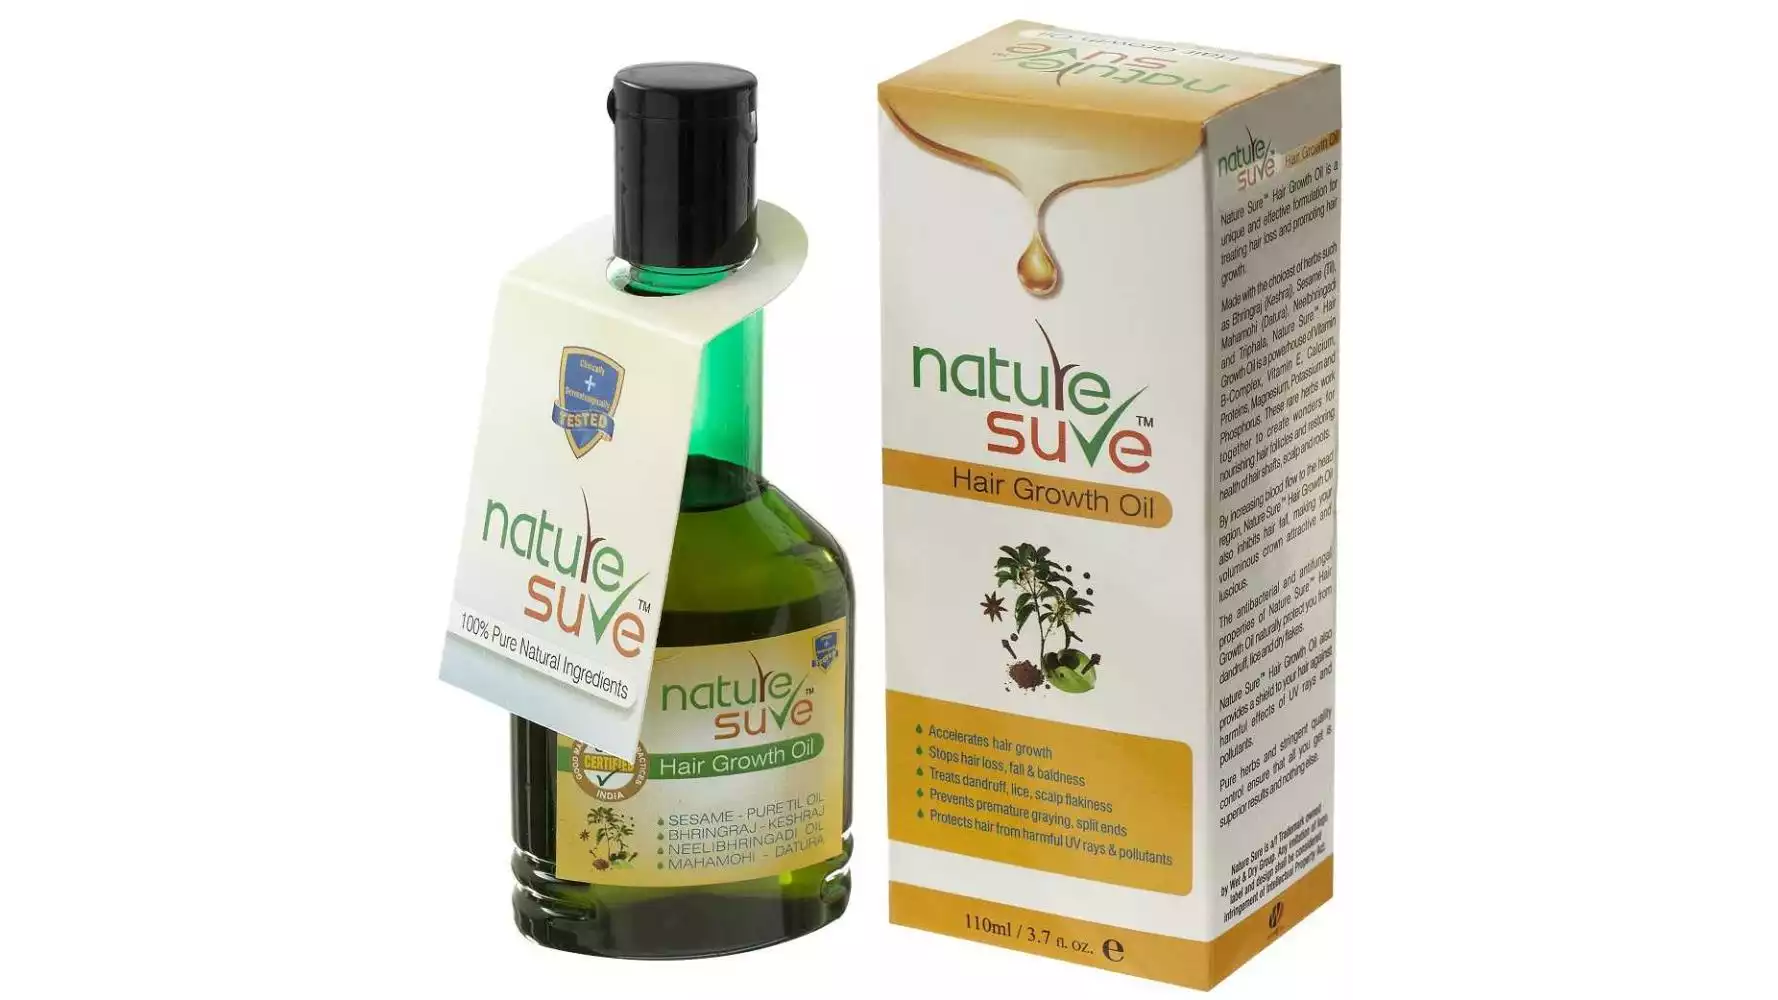 Nature Sure Hair Growth Oil (110ml)